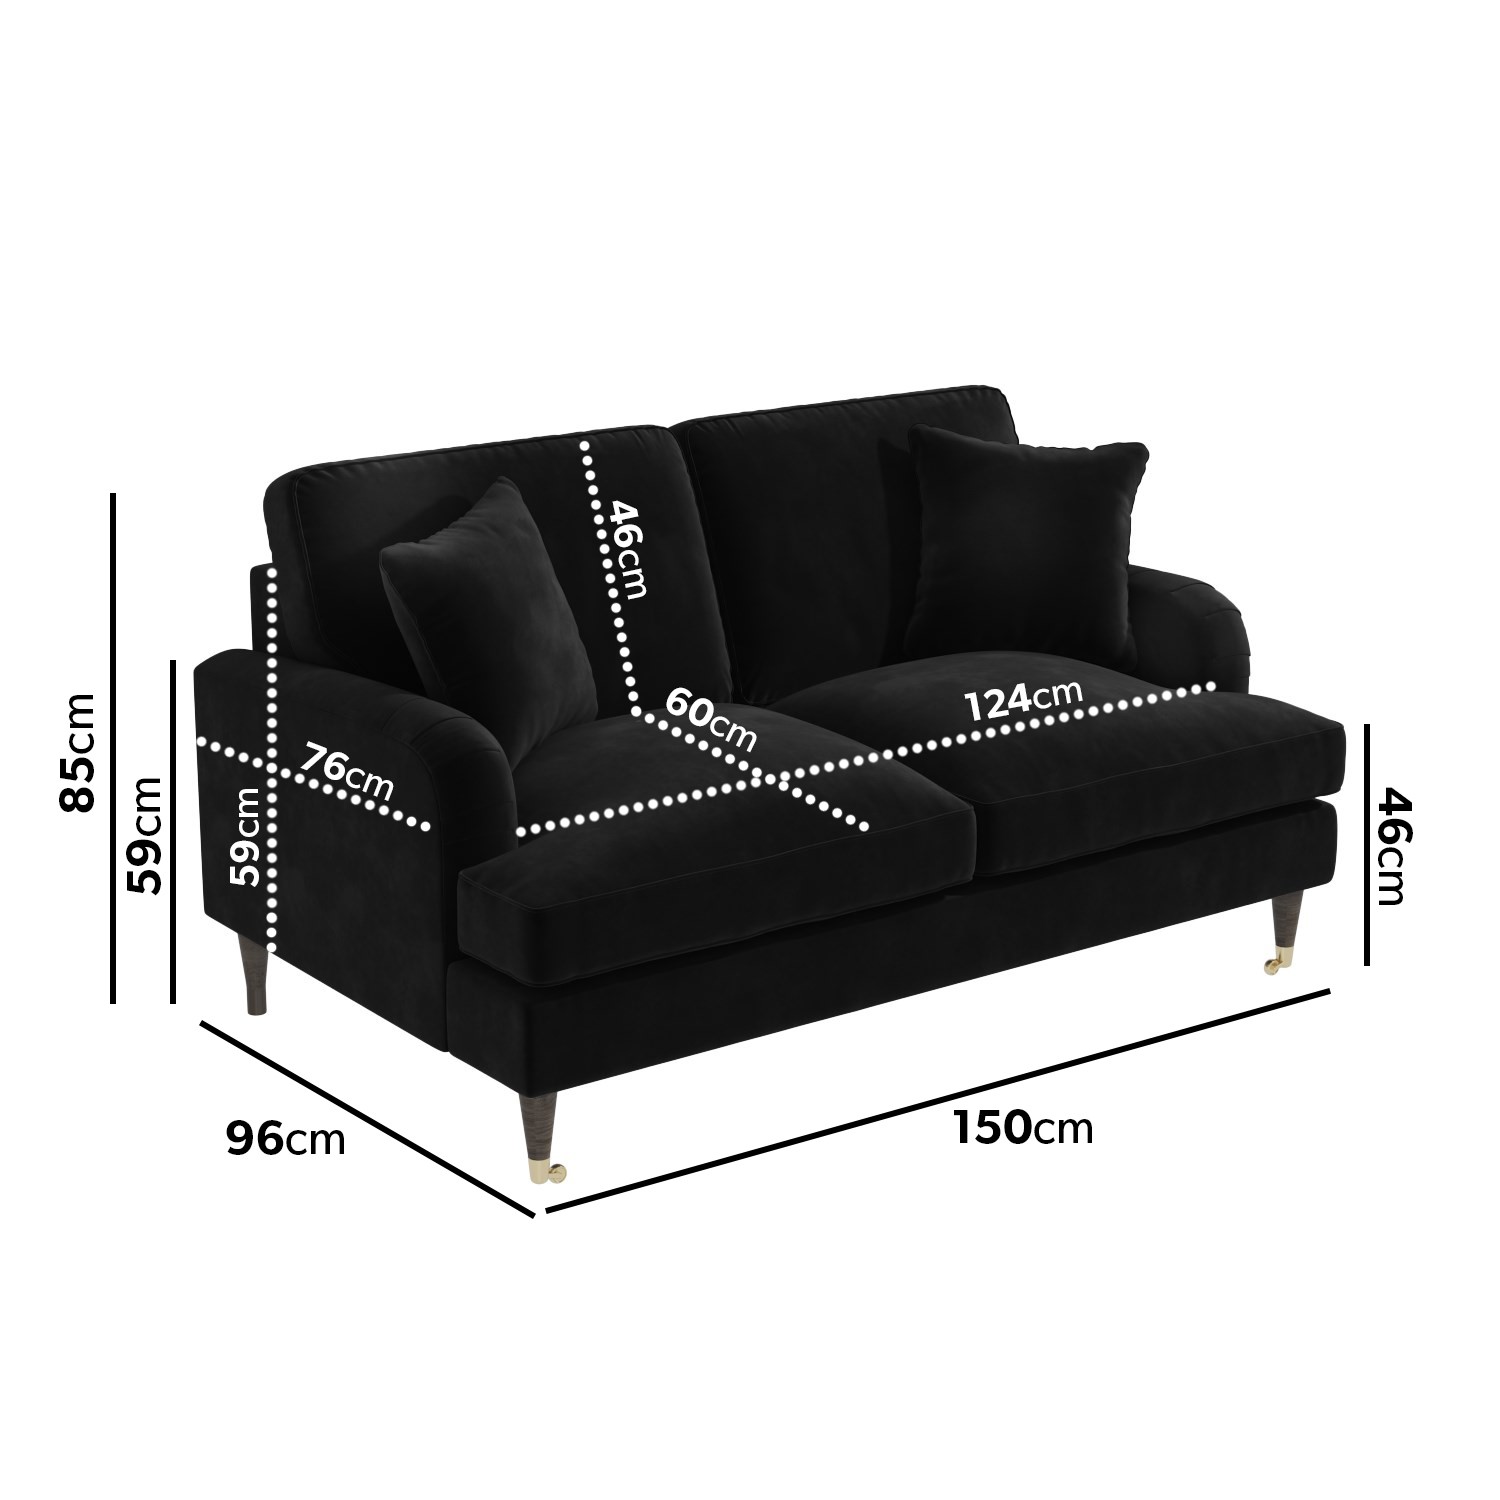 Read more about Black velvet 3 seater & 2 seater sofa set payton